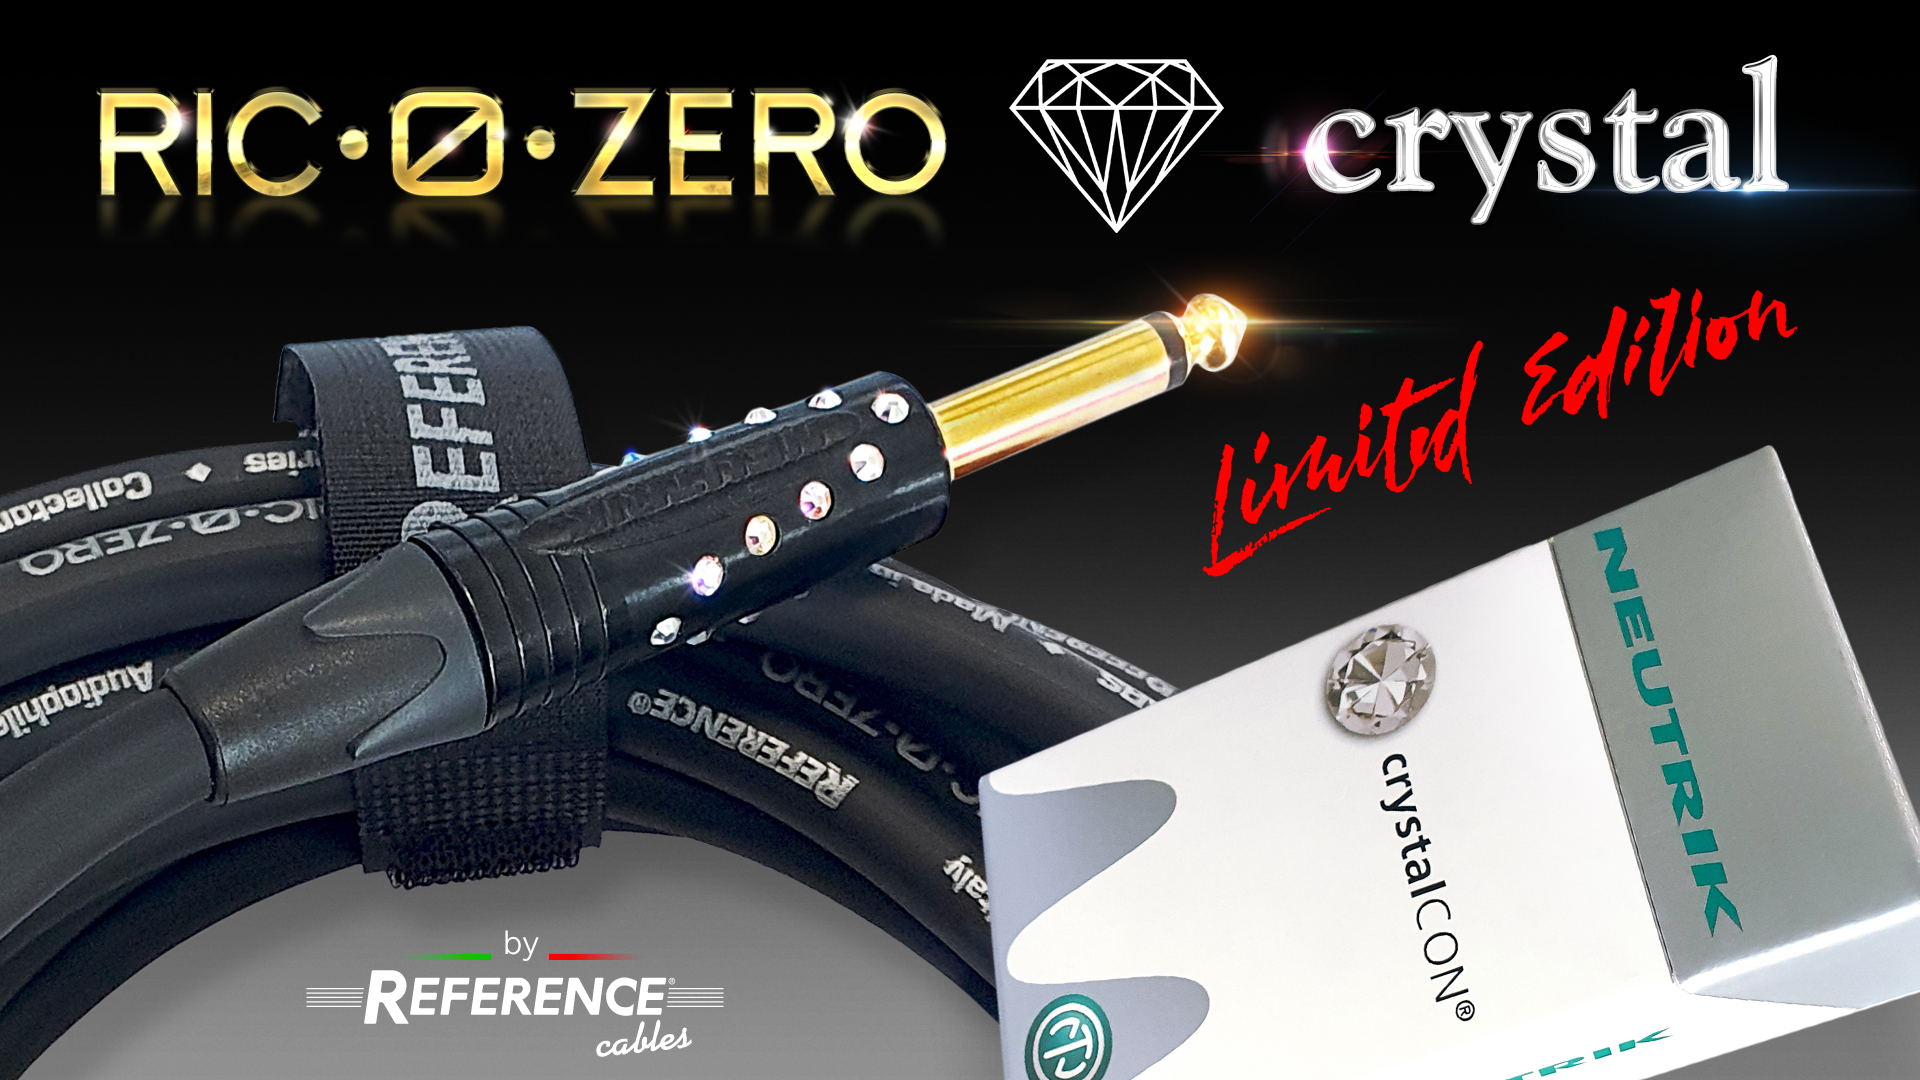 RMC-0-ZERO “Crystal” Edition